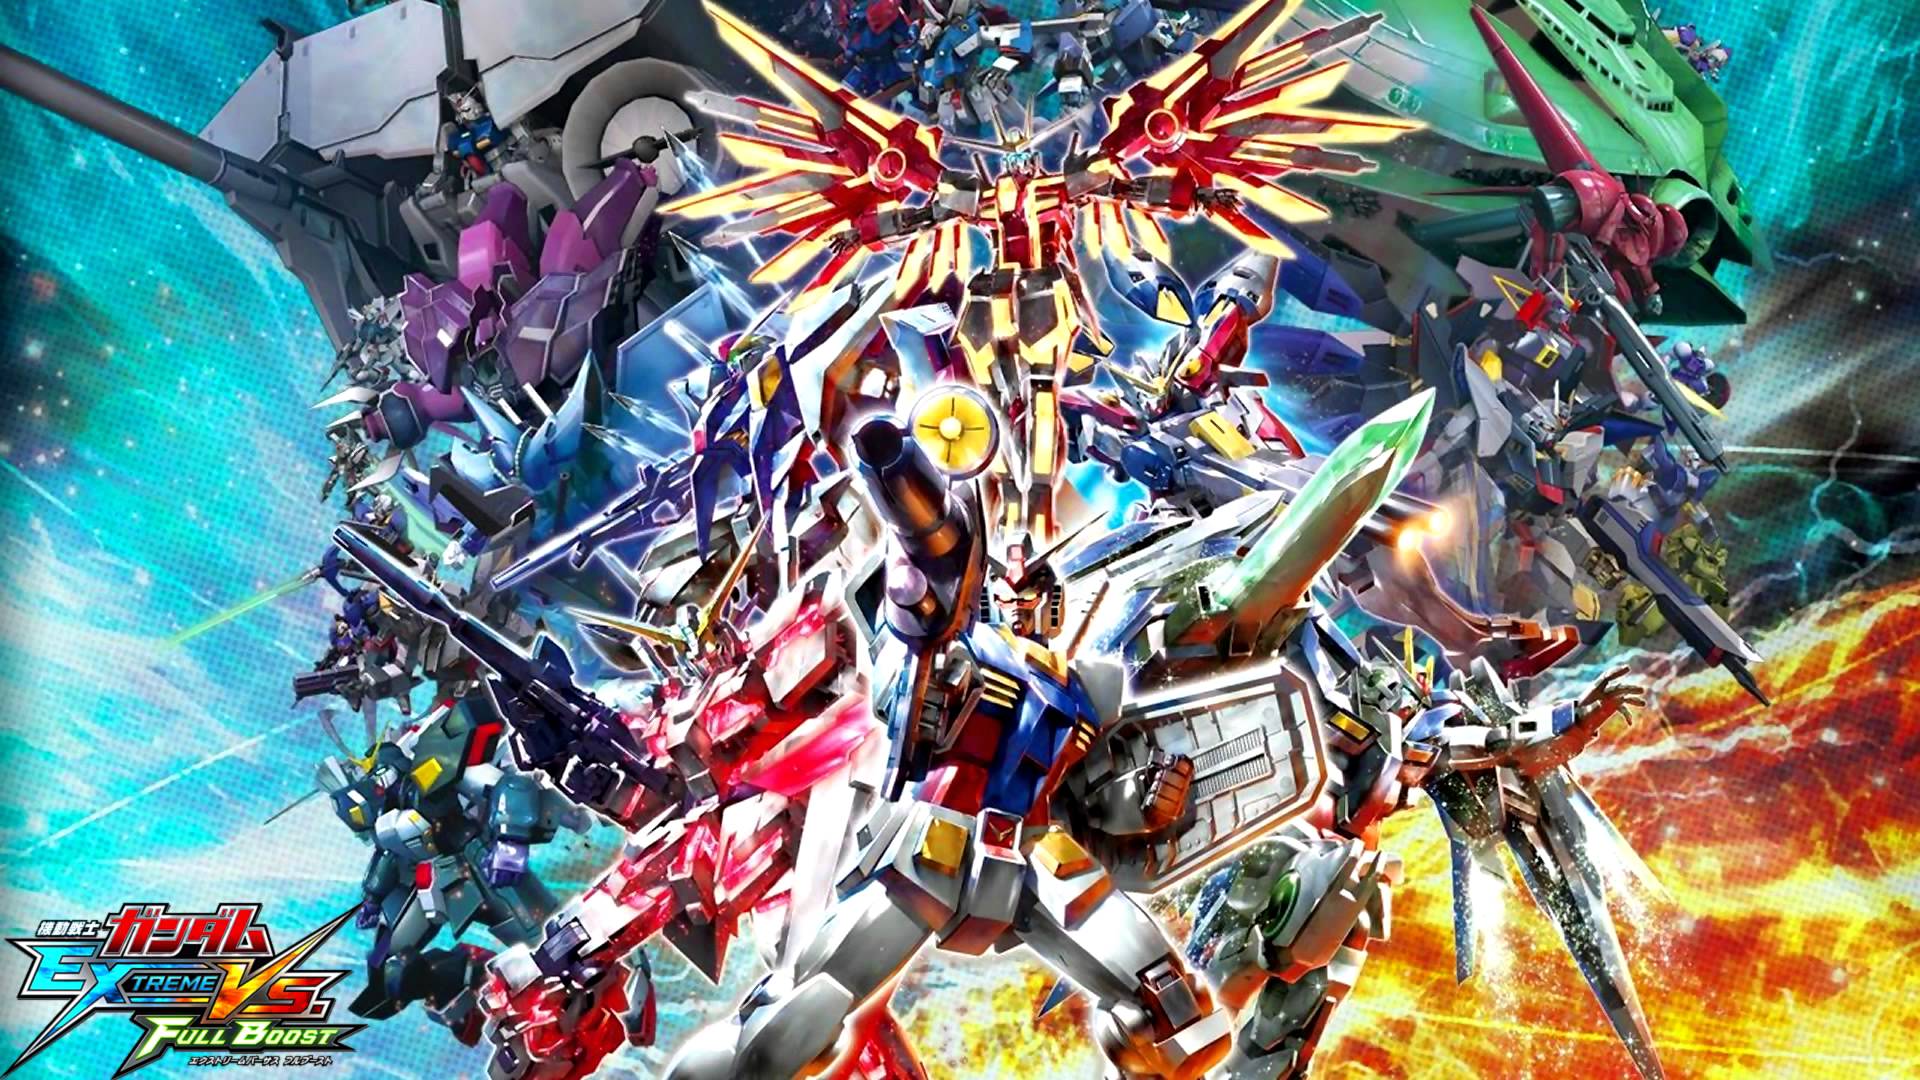 Kidou Senshi Gundam: Extreme VS. Full Boost